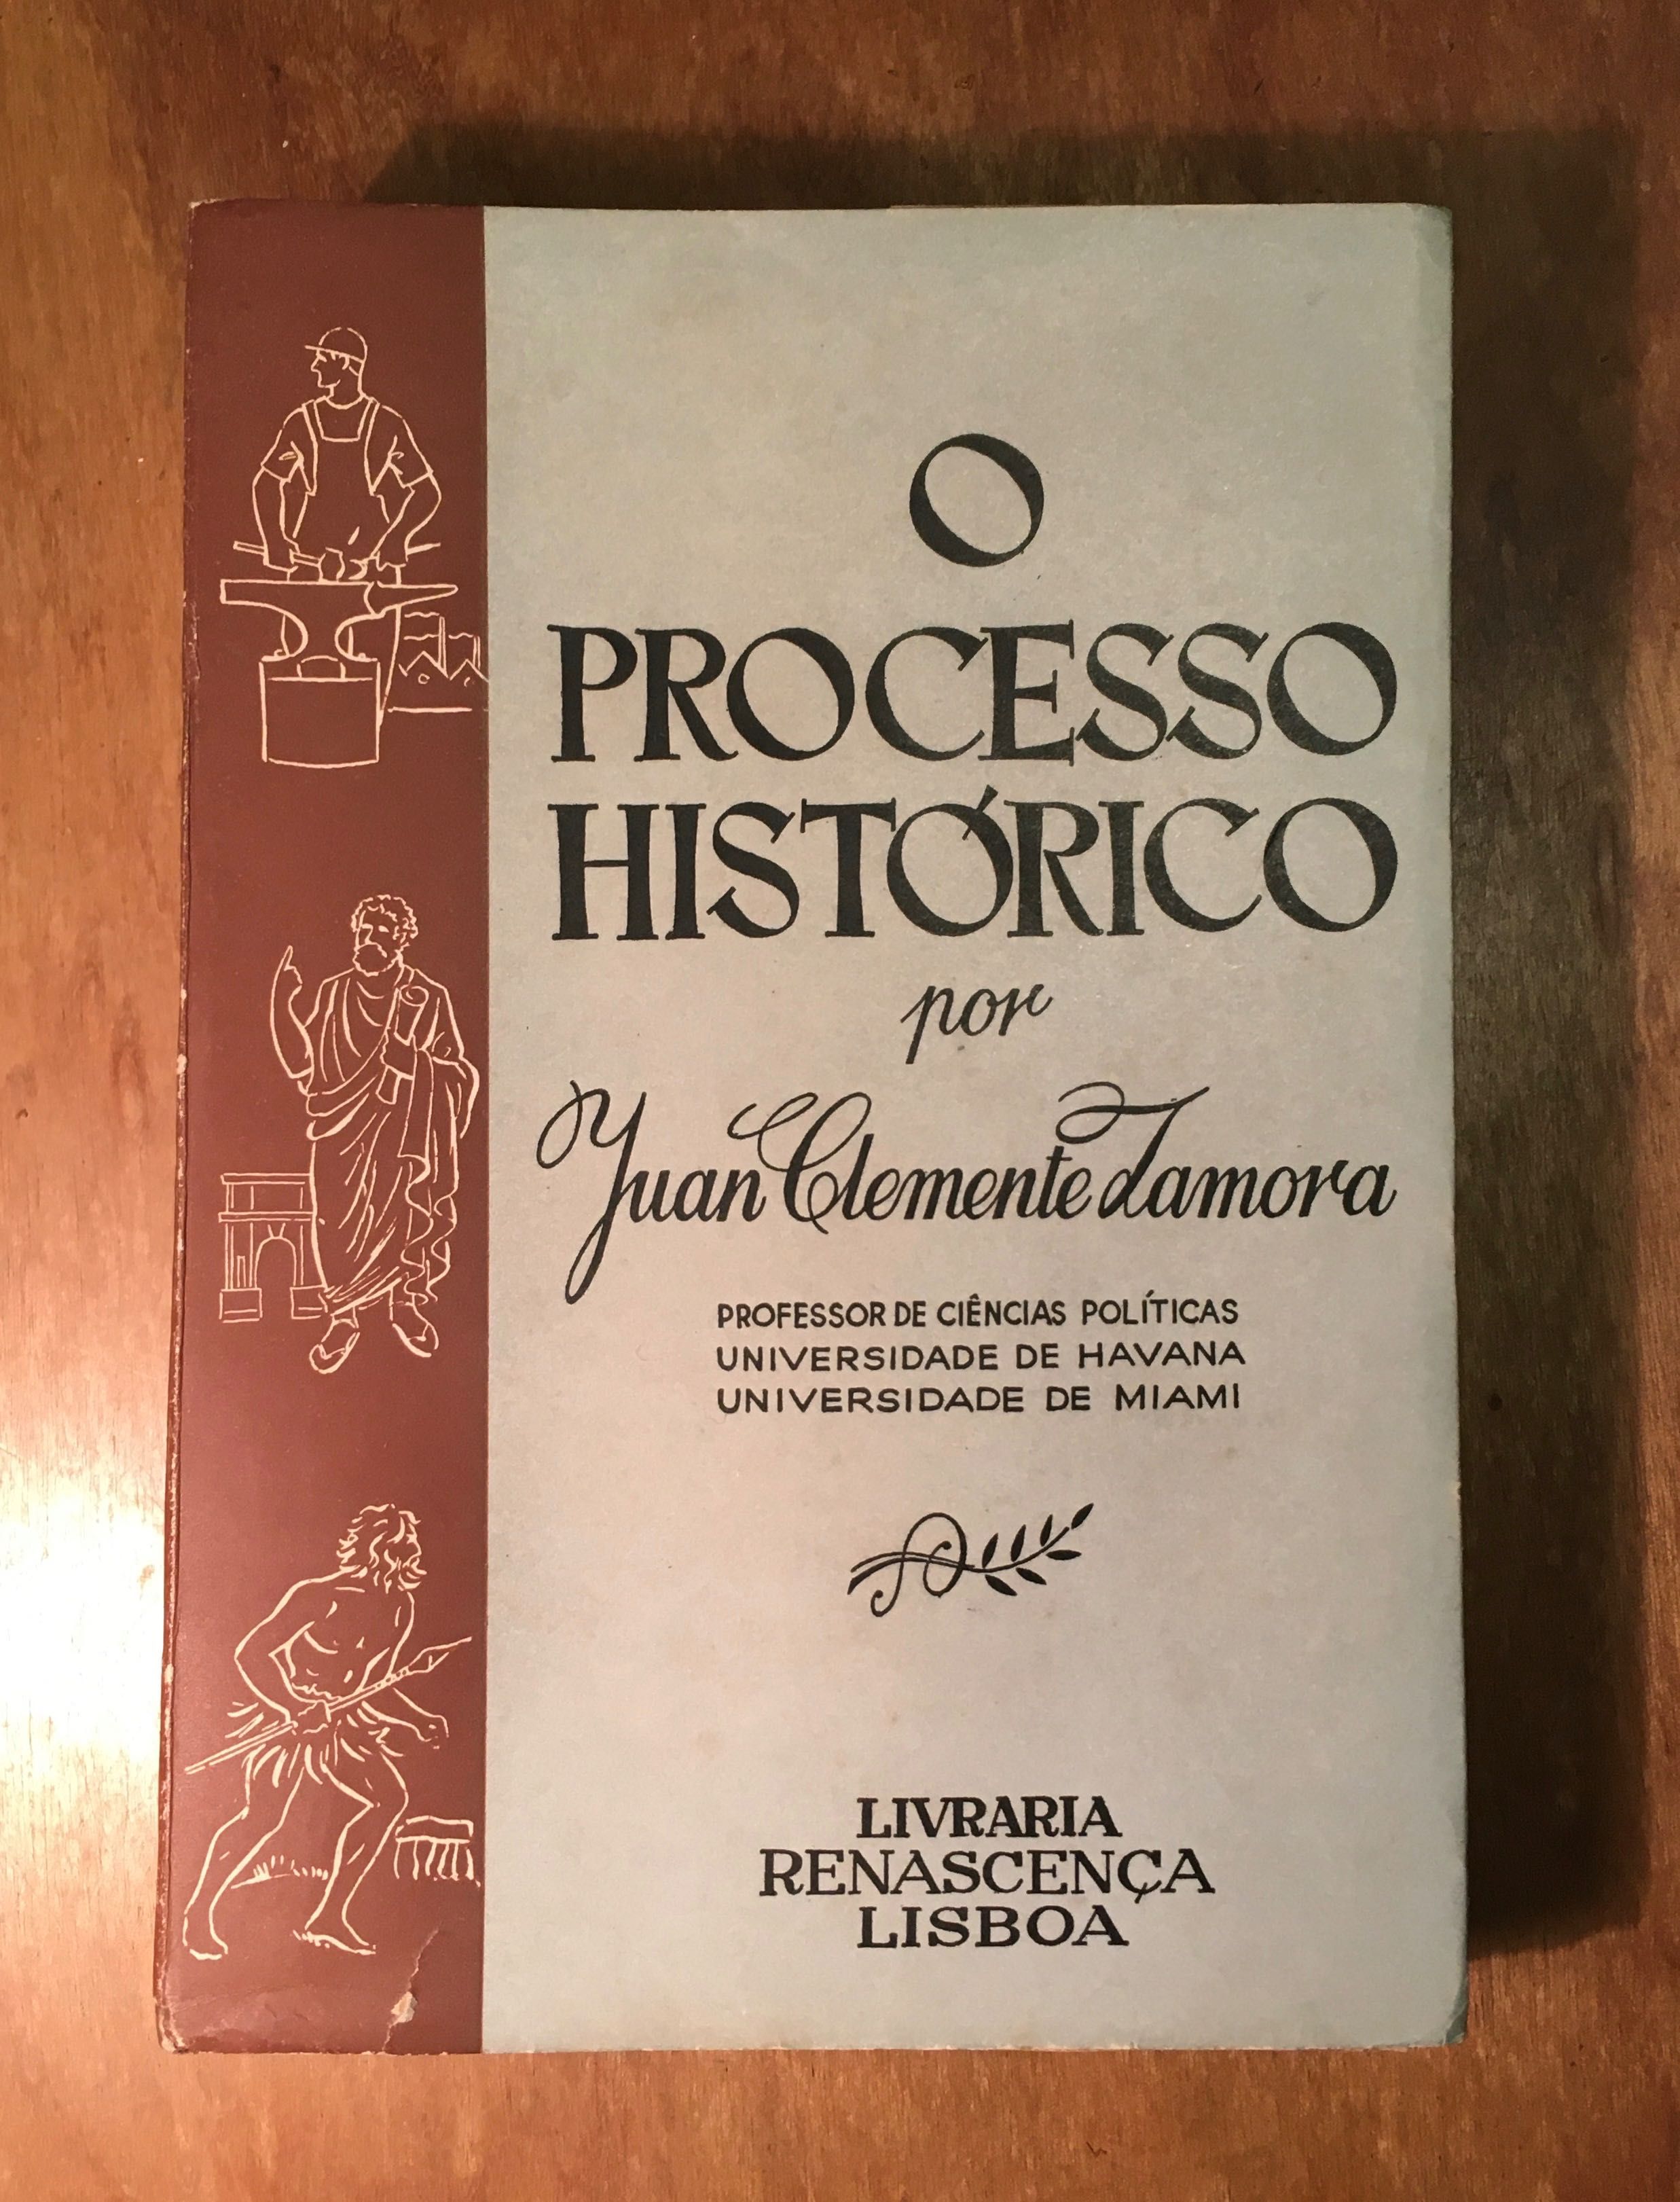 O PROCESSO HISTÓRICO - 1946 - Juan Clemente Zamora